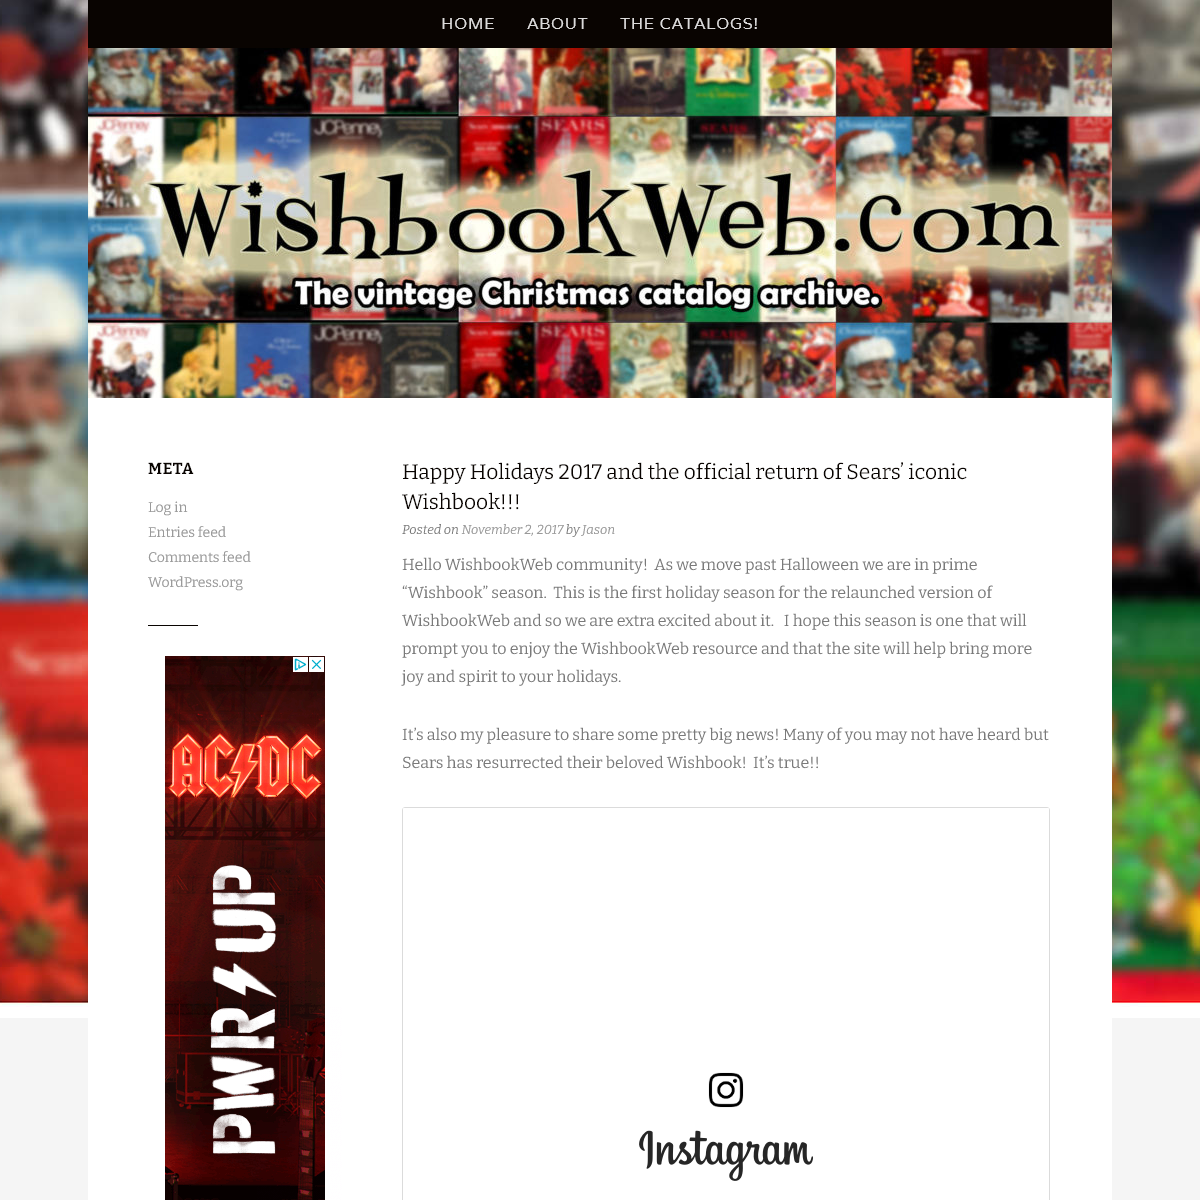 A complete backup of wishbookweb.com